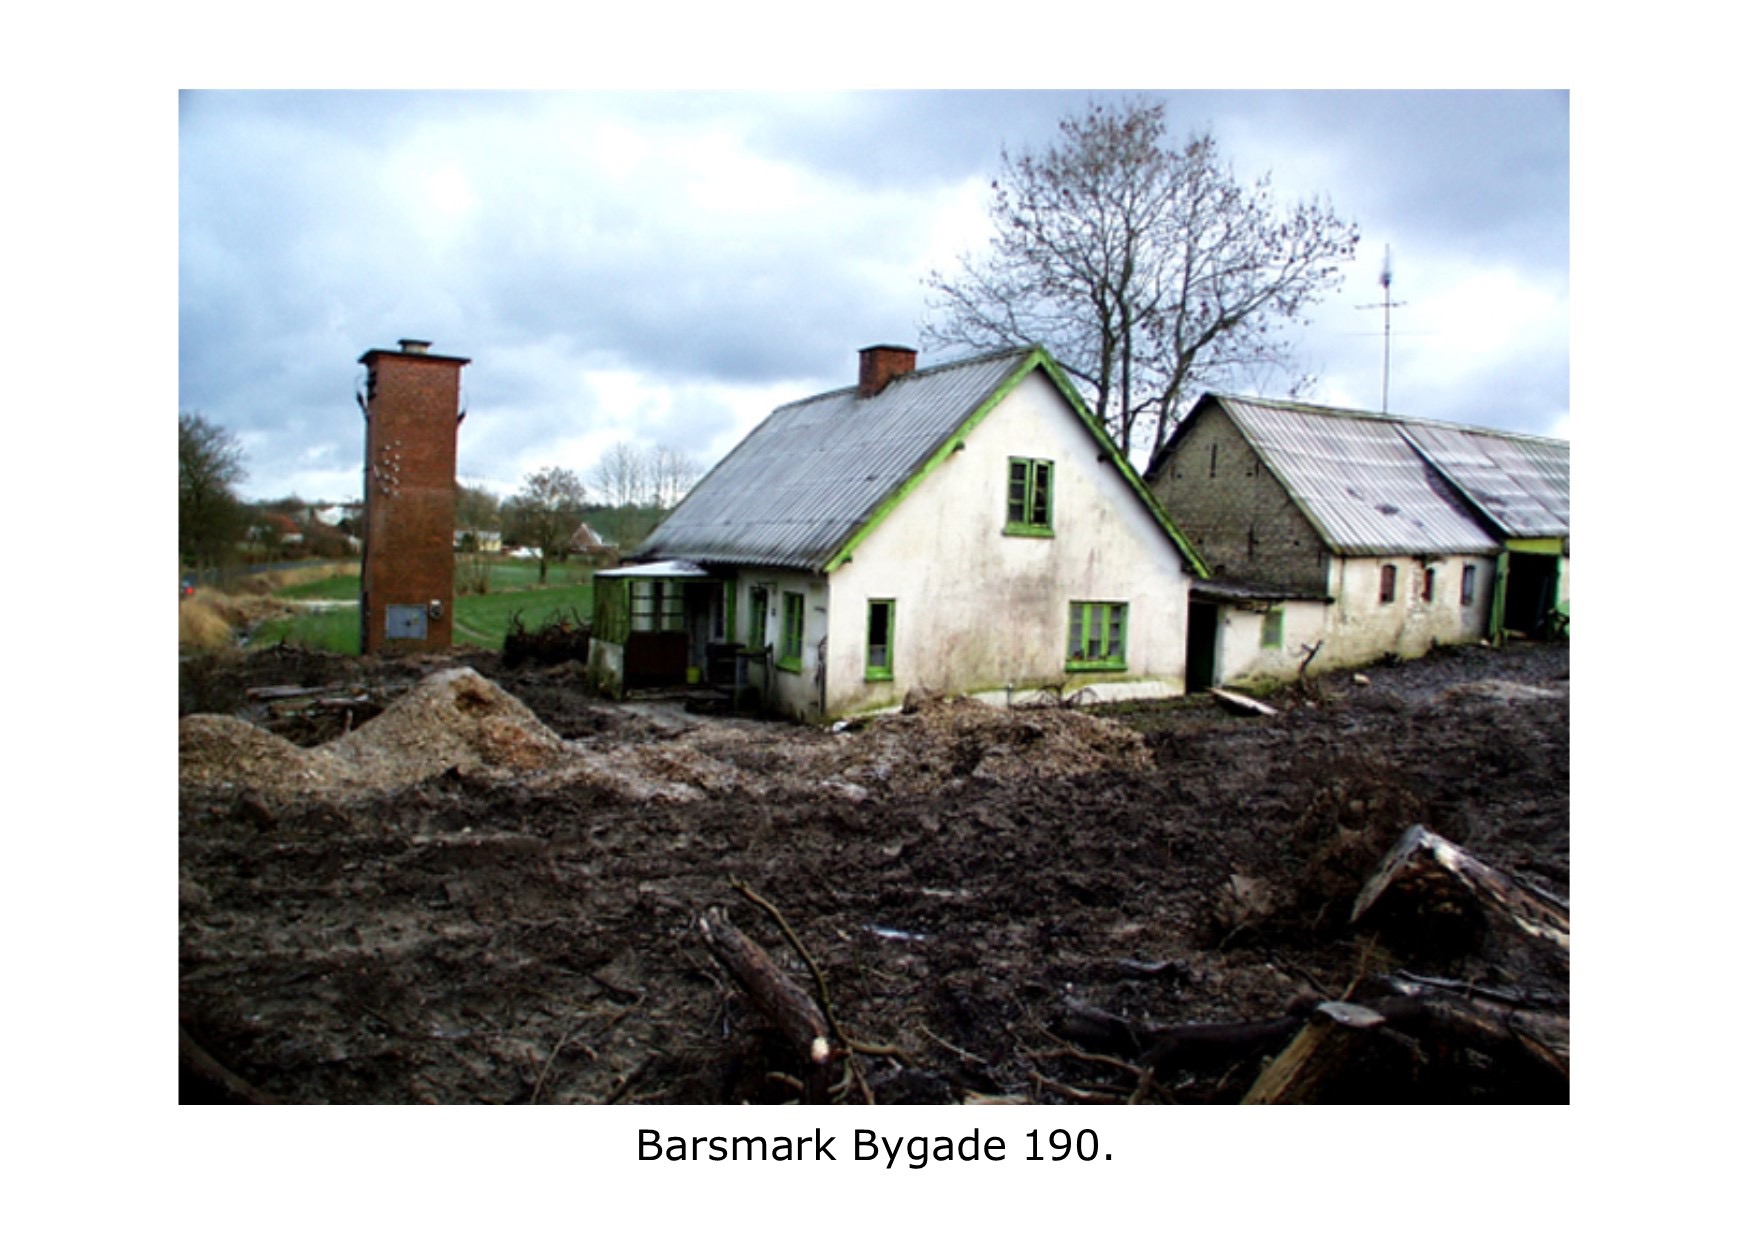 Barsmark Bygade 190 